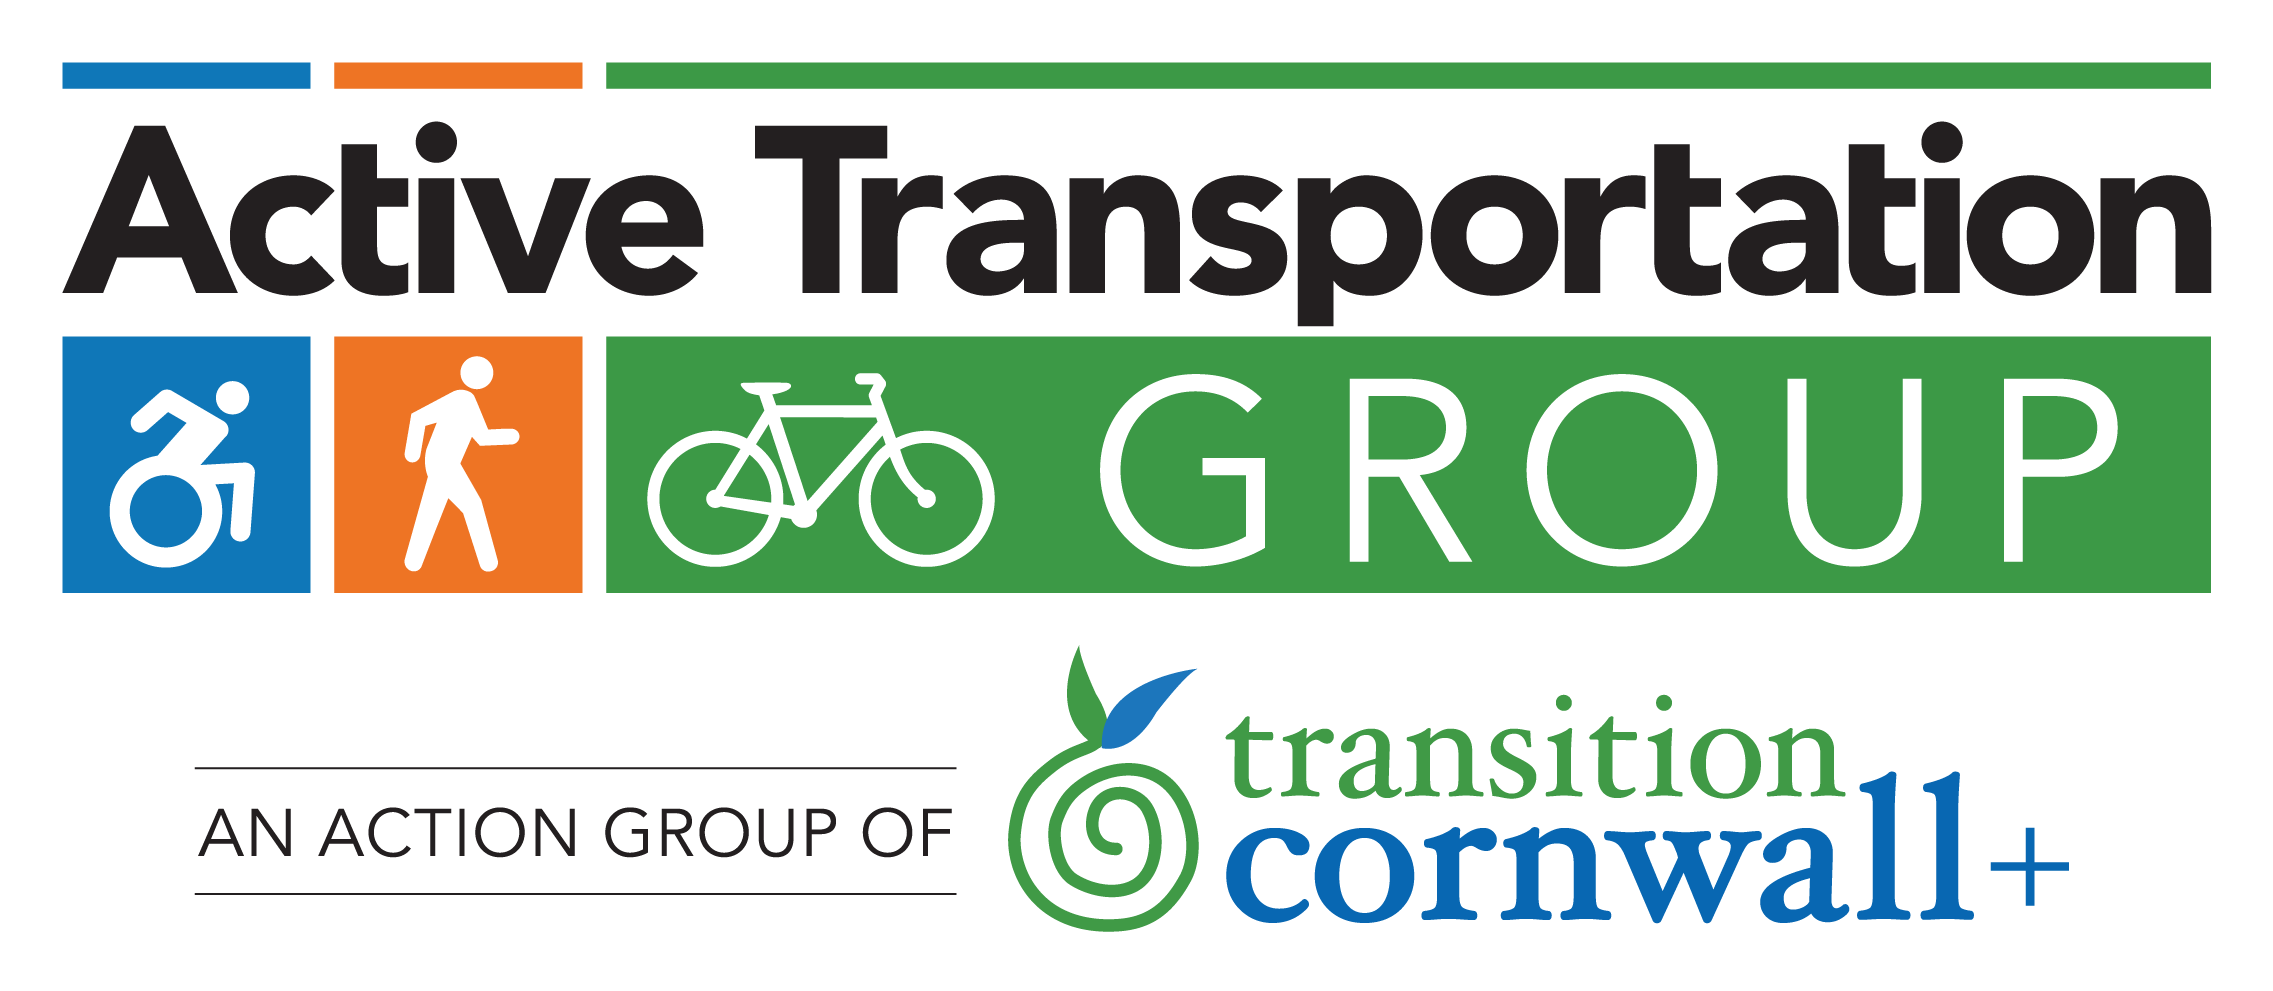 New Active Transportation Logo E_2016